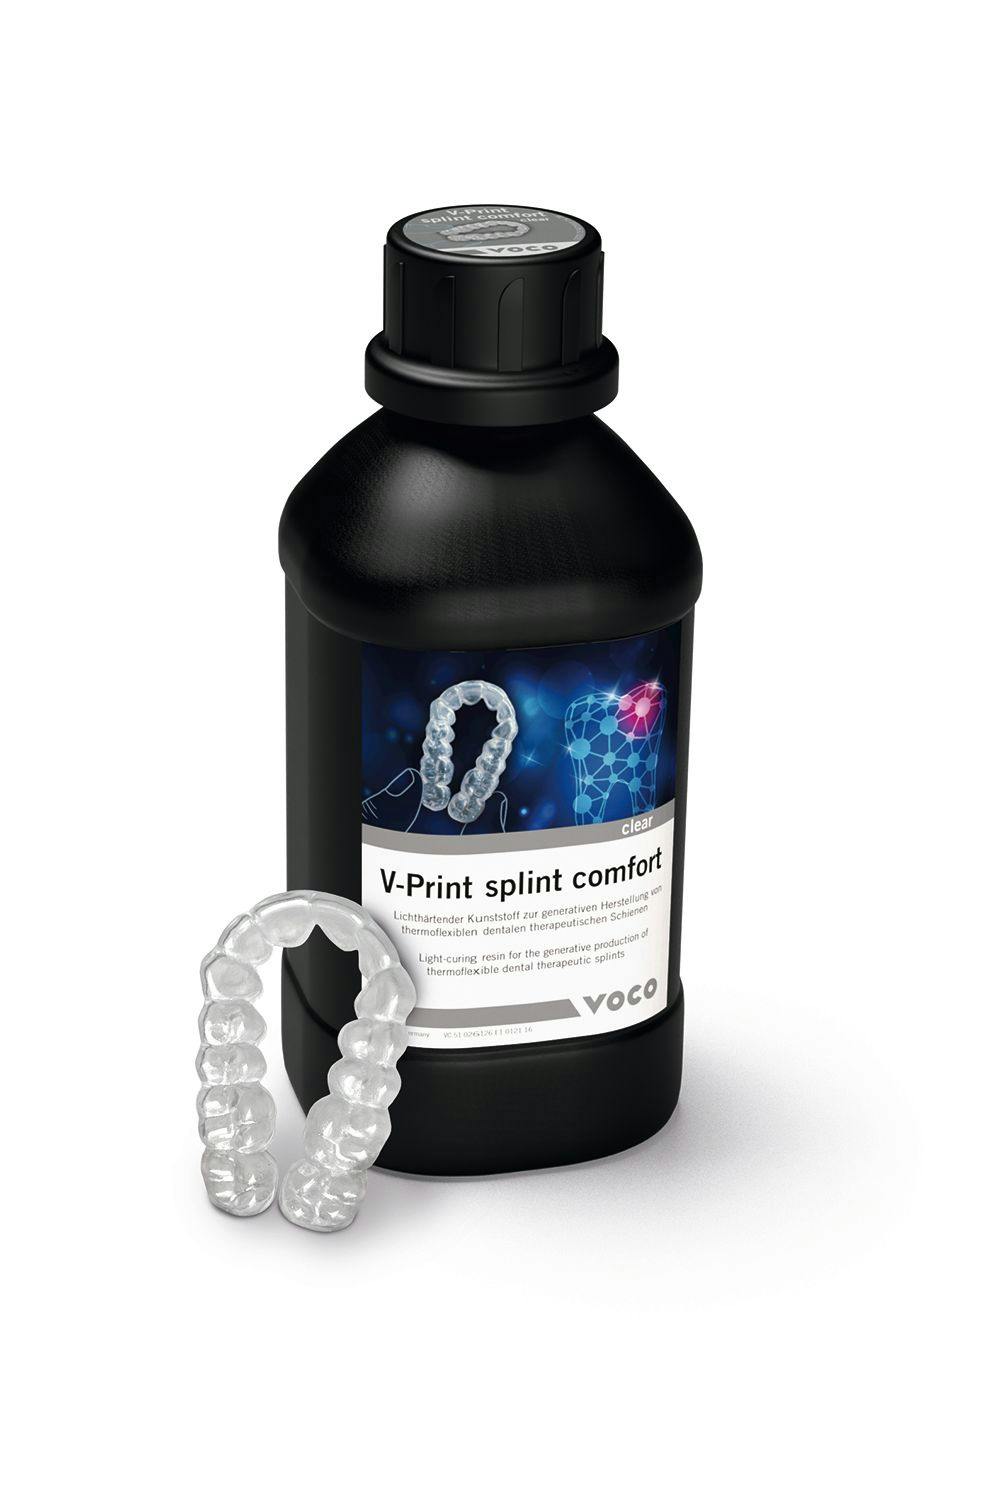 VOCO’s V-Print Splint Comfort Now FDA 510-k Cleared